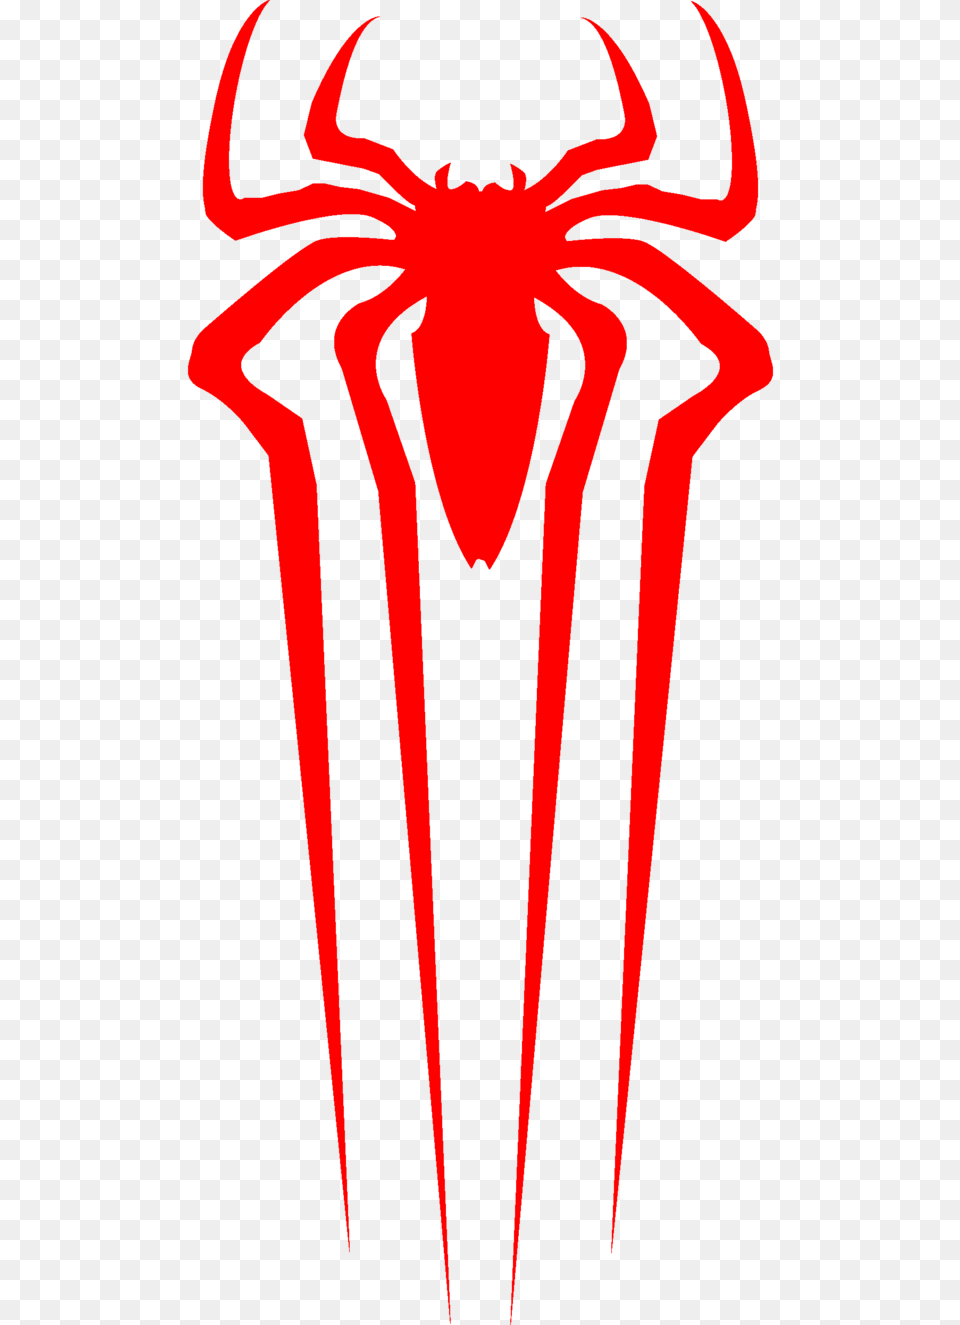 Heroes Spiderman Spiderman Costume, Light, Logo, Emblem, Symbol Png